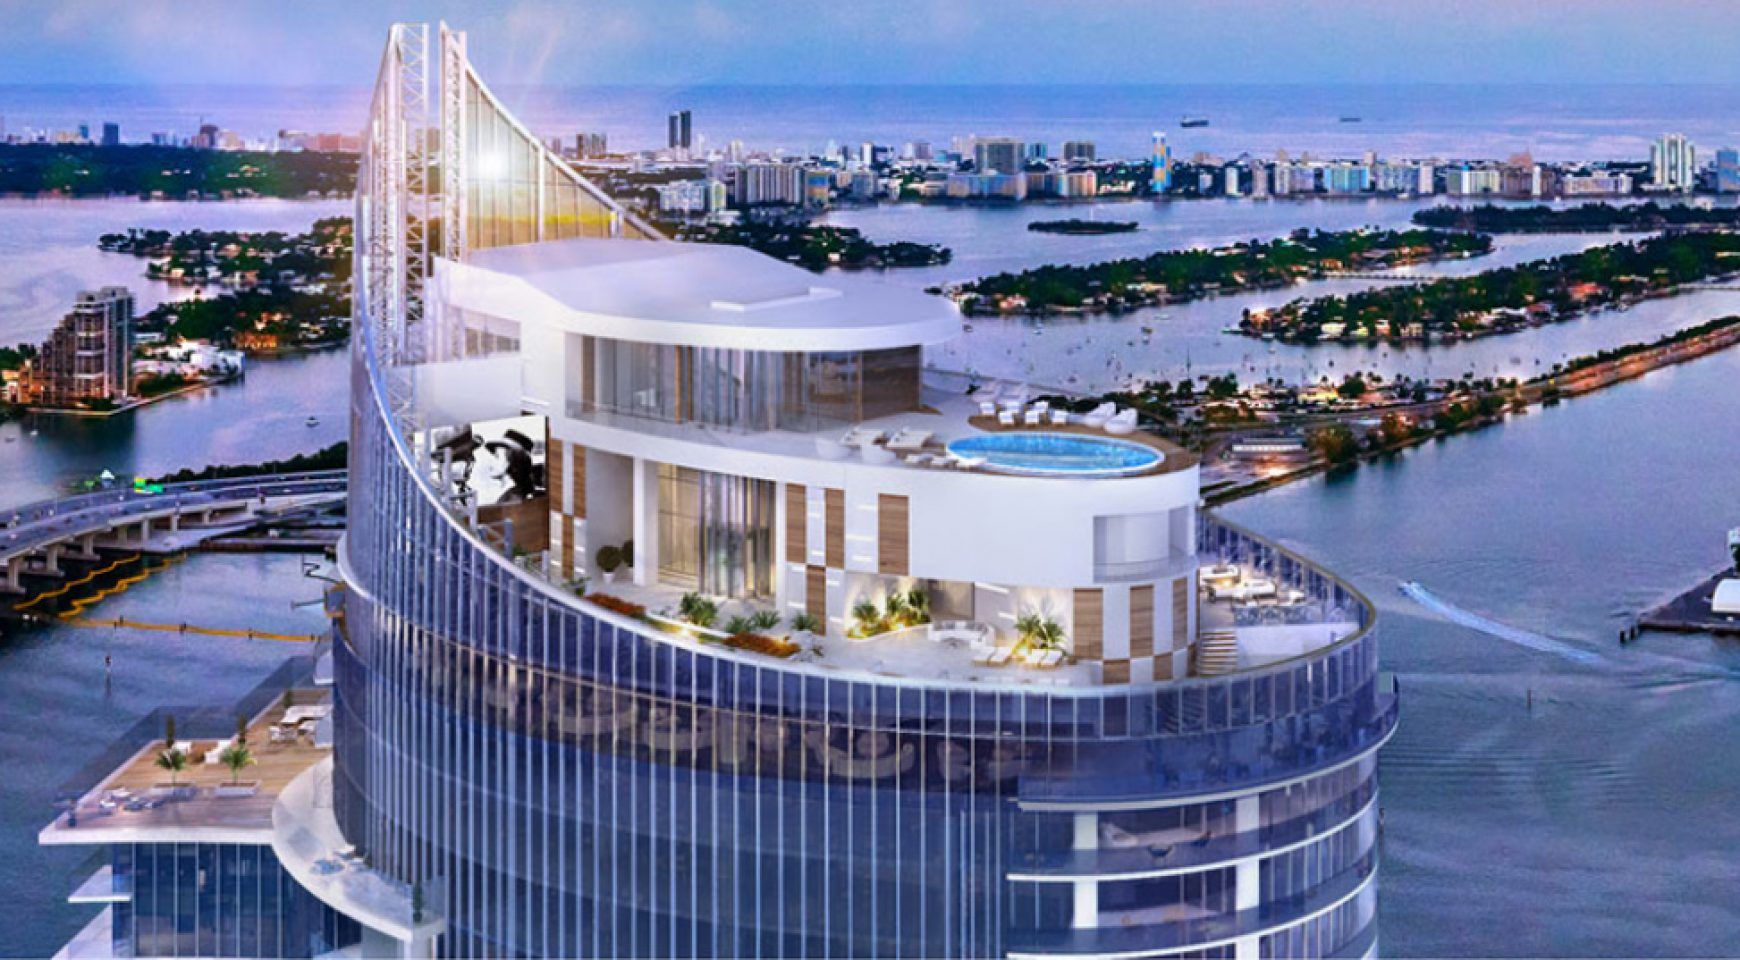 Largest Electronic Hanukkah Menorah: Paramount Miami Worldcenter sets world record